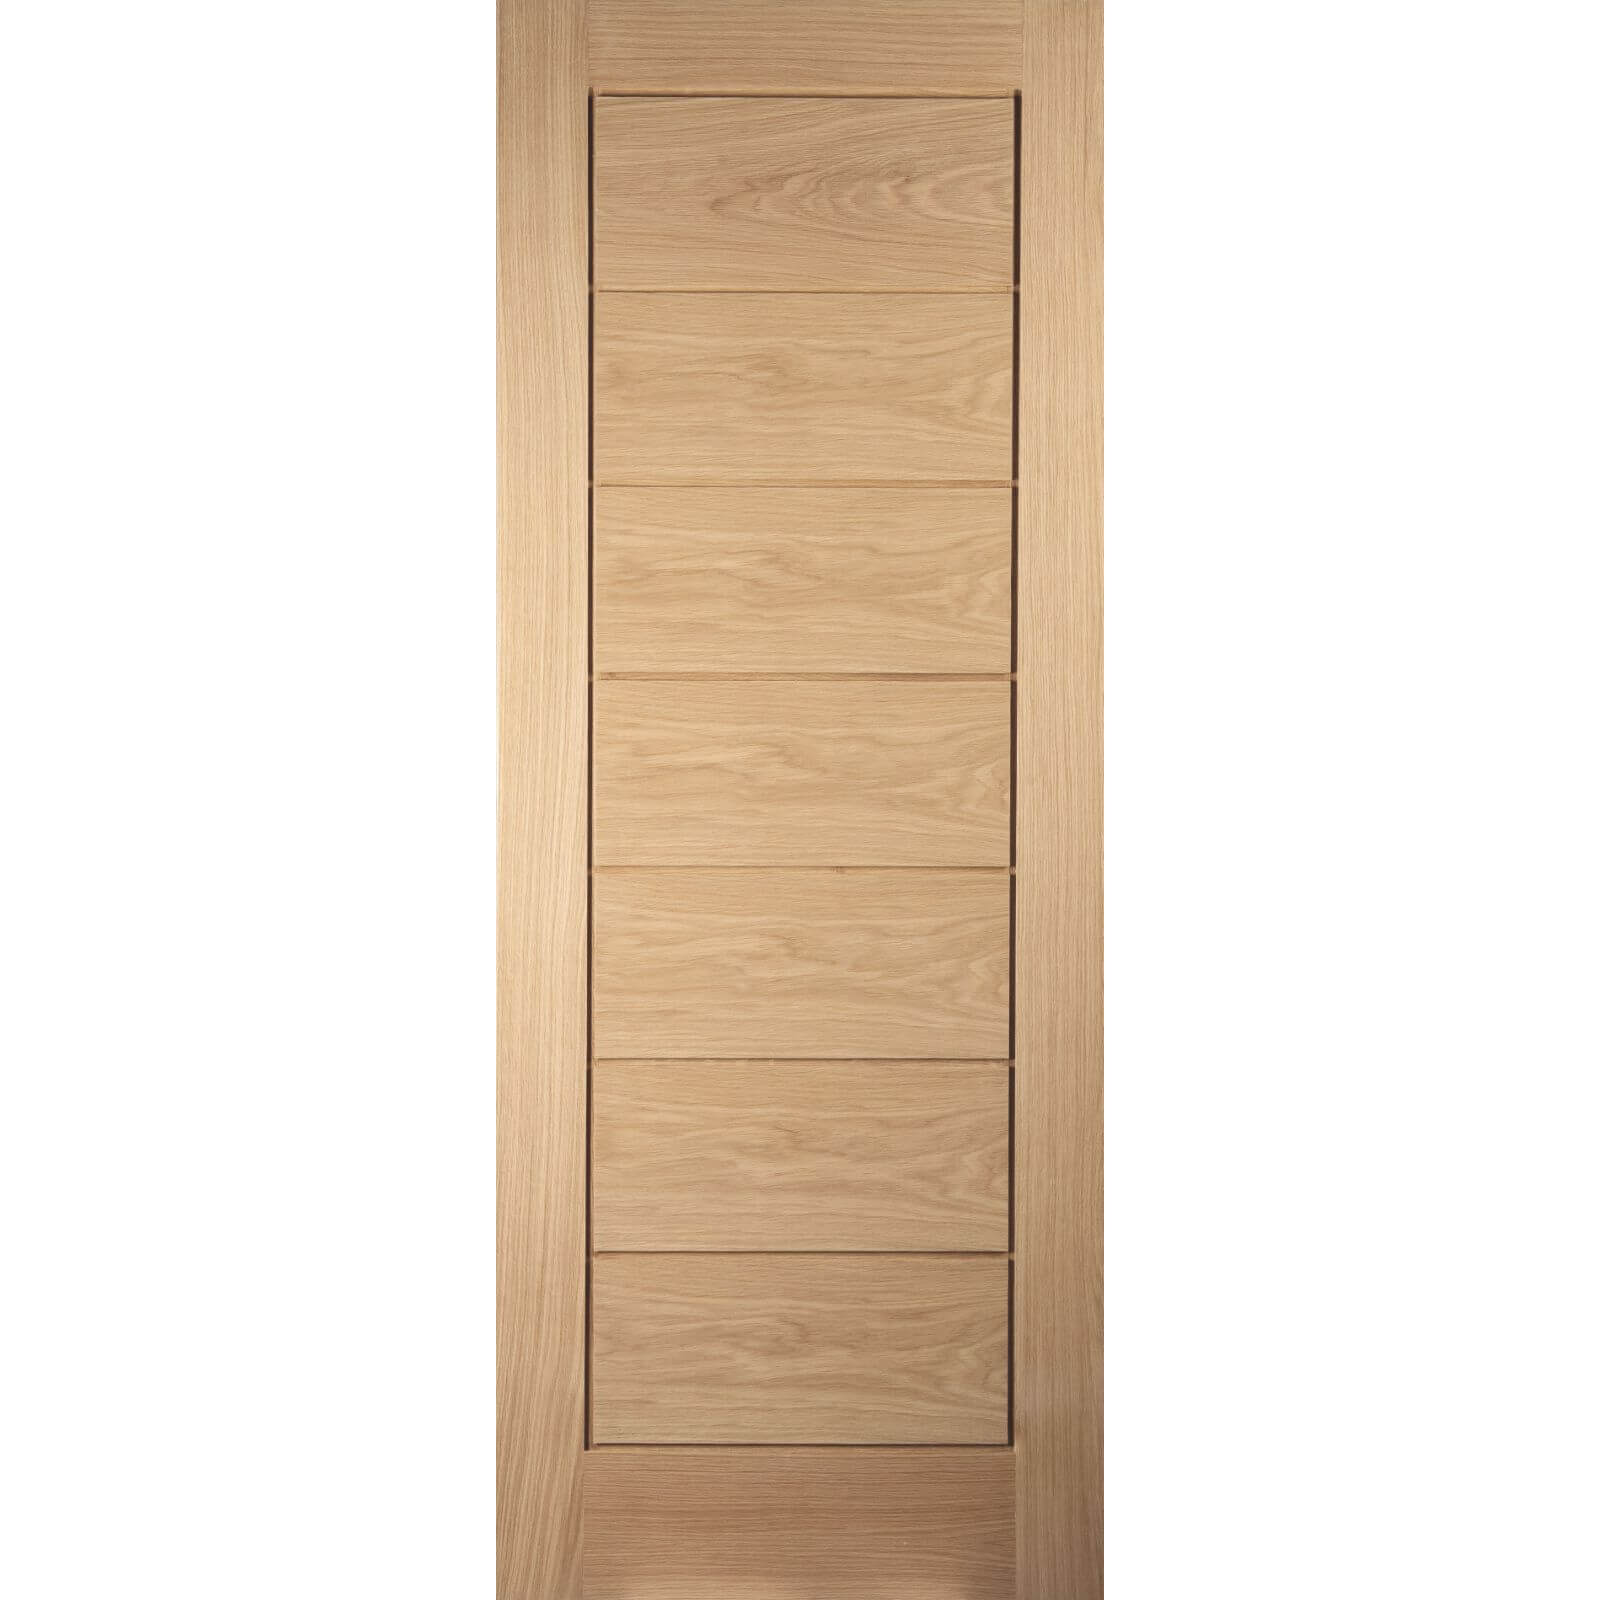 Photo of Horizontal 7 Panel White Oak Veneer Internal Door - 726mm Wide